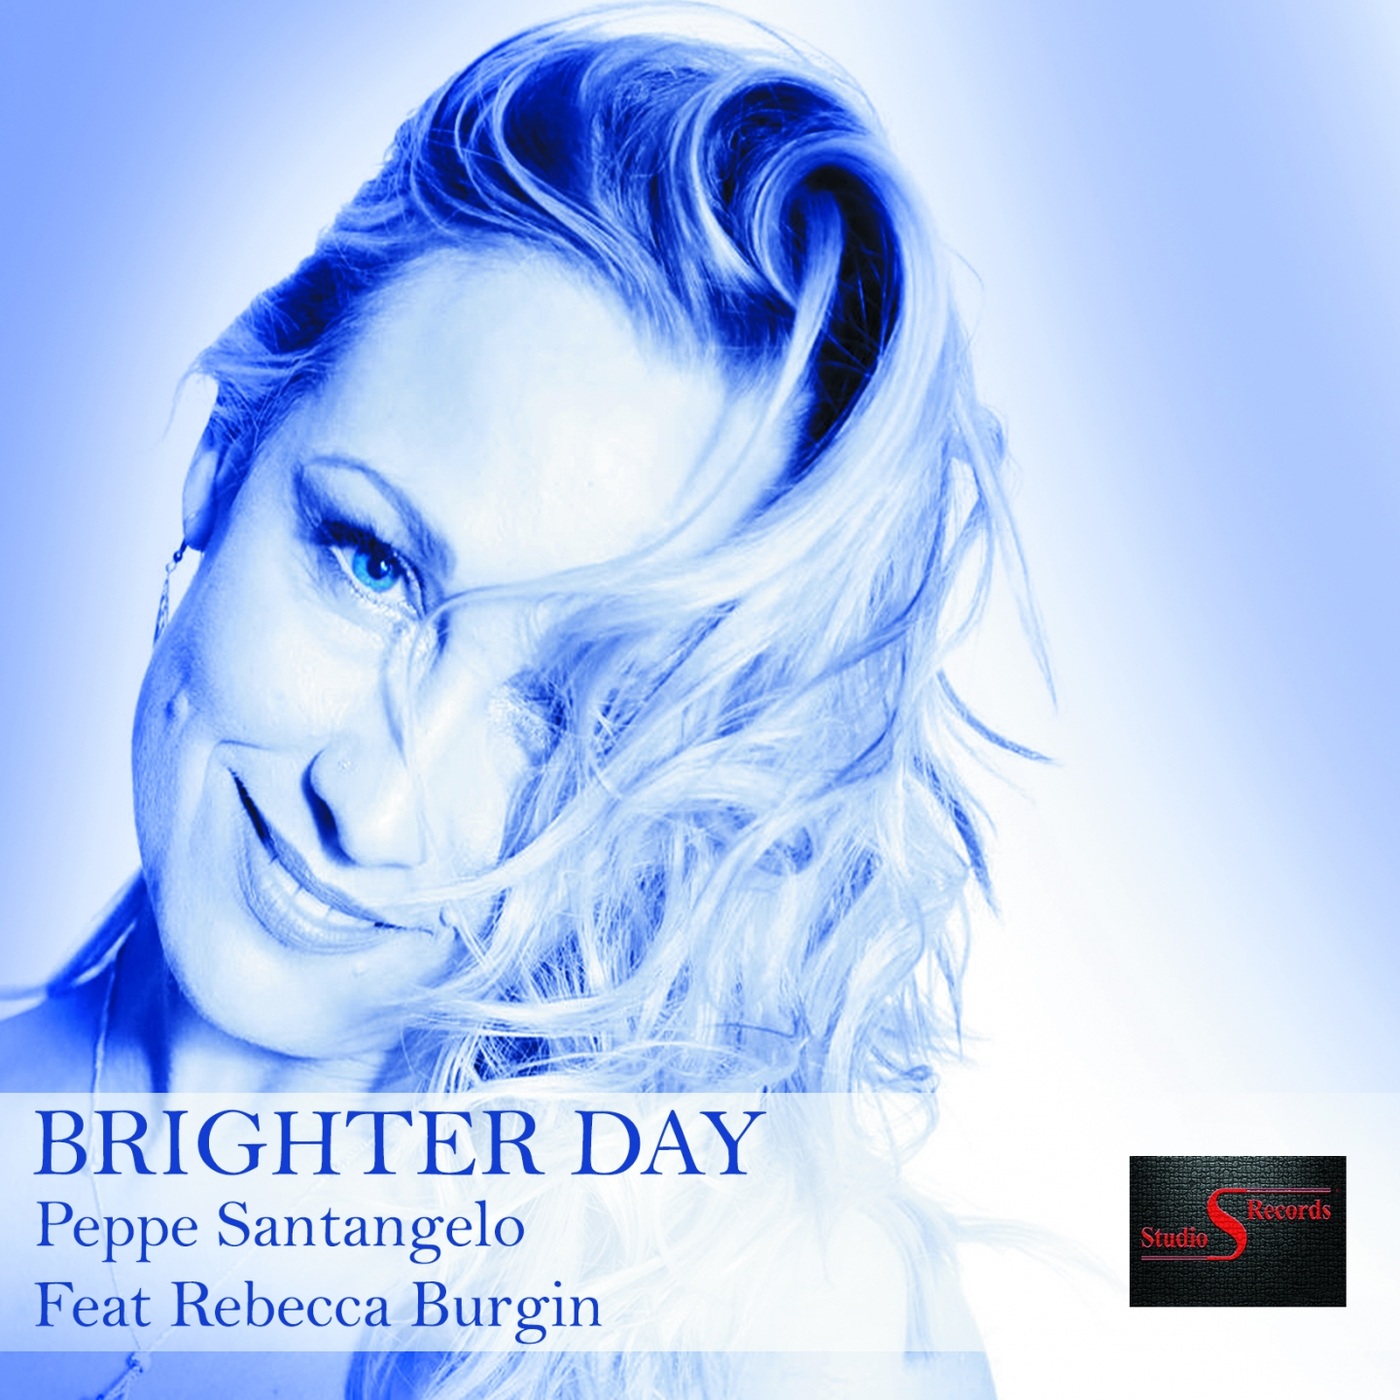 Peppe Santangelo ft Rebecca Burgin - Brighter Day / Studio S Records